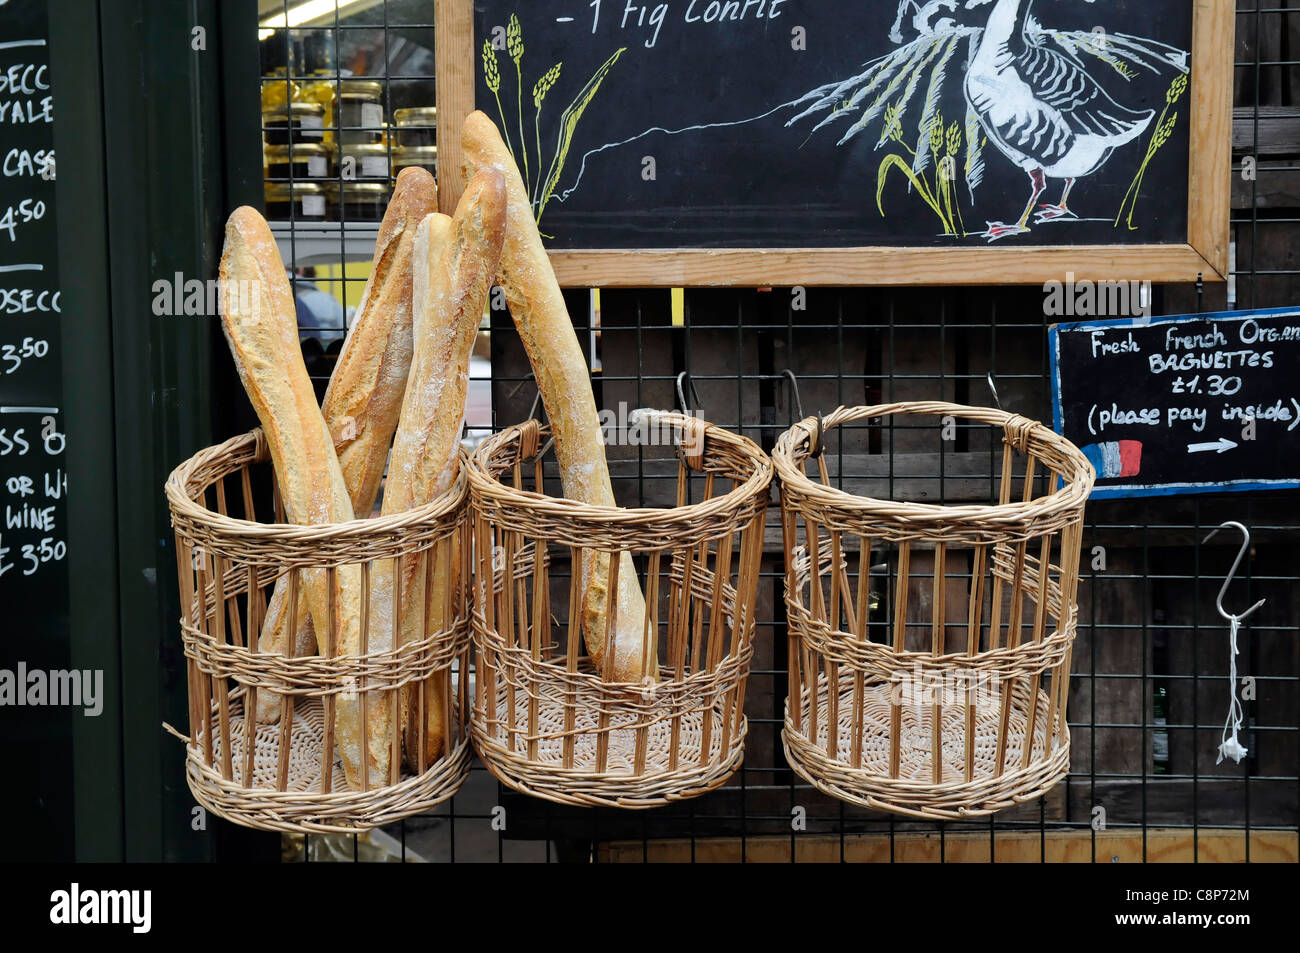 Bread baskets, Borough Market, London. Stock Photo